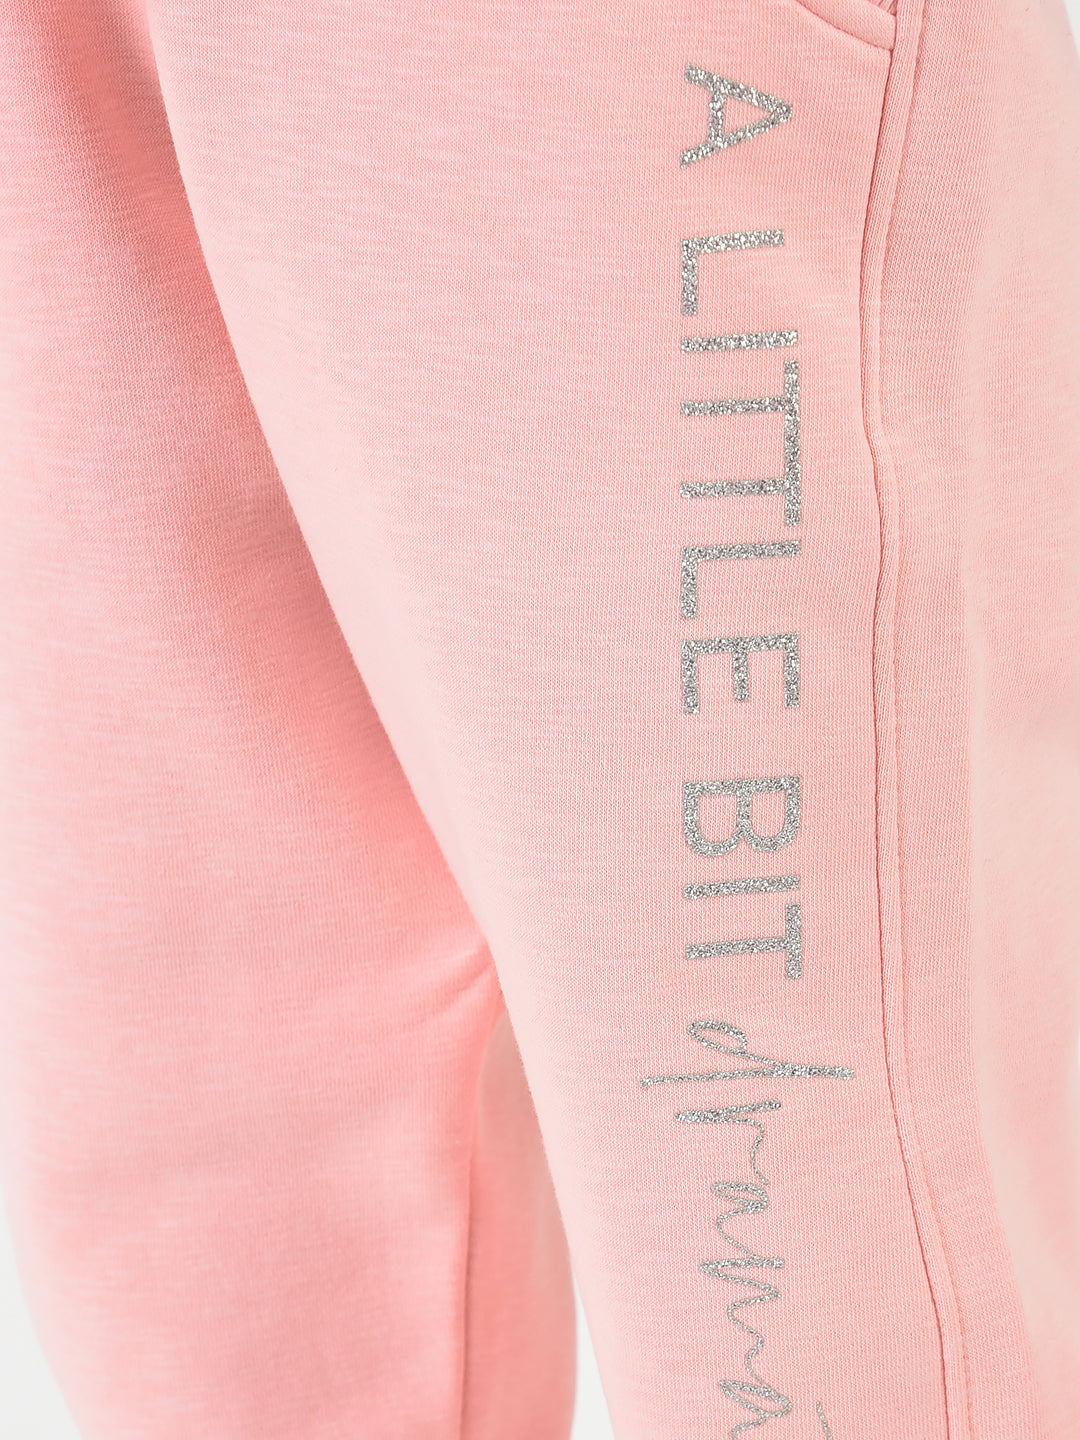 Girls Pink Rib Brand Tape Track Pants